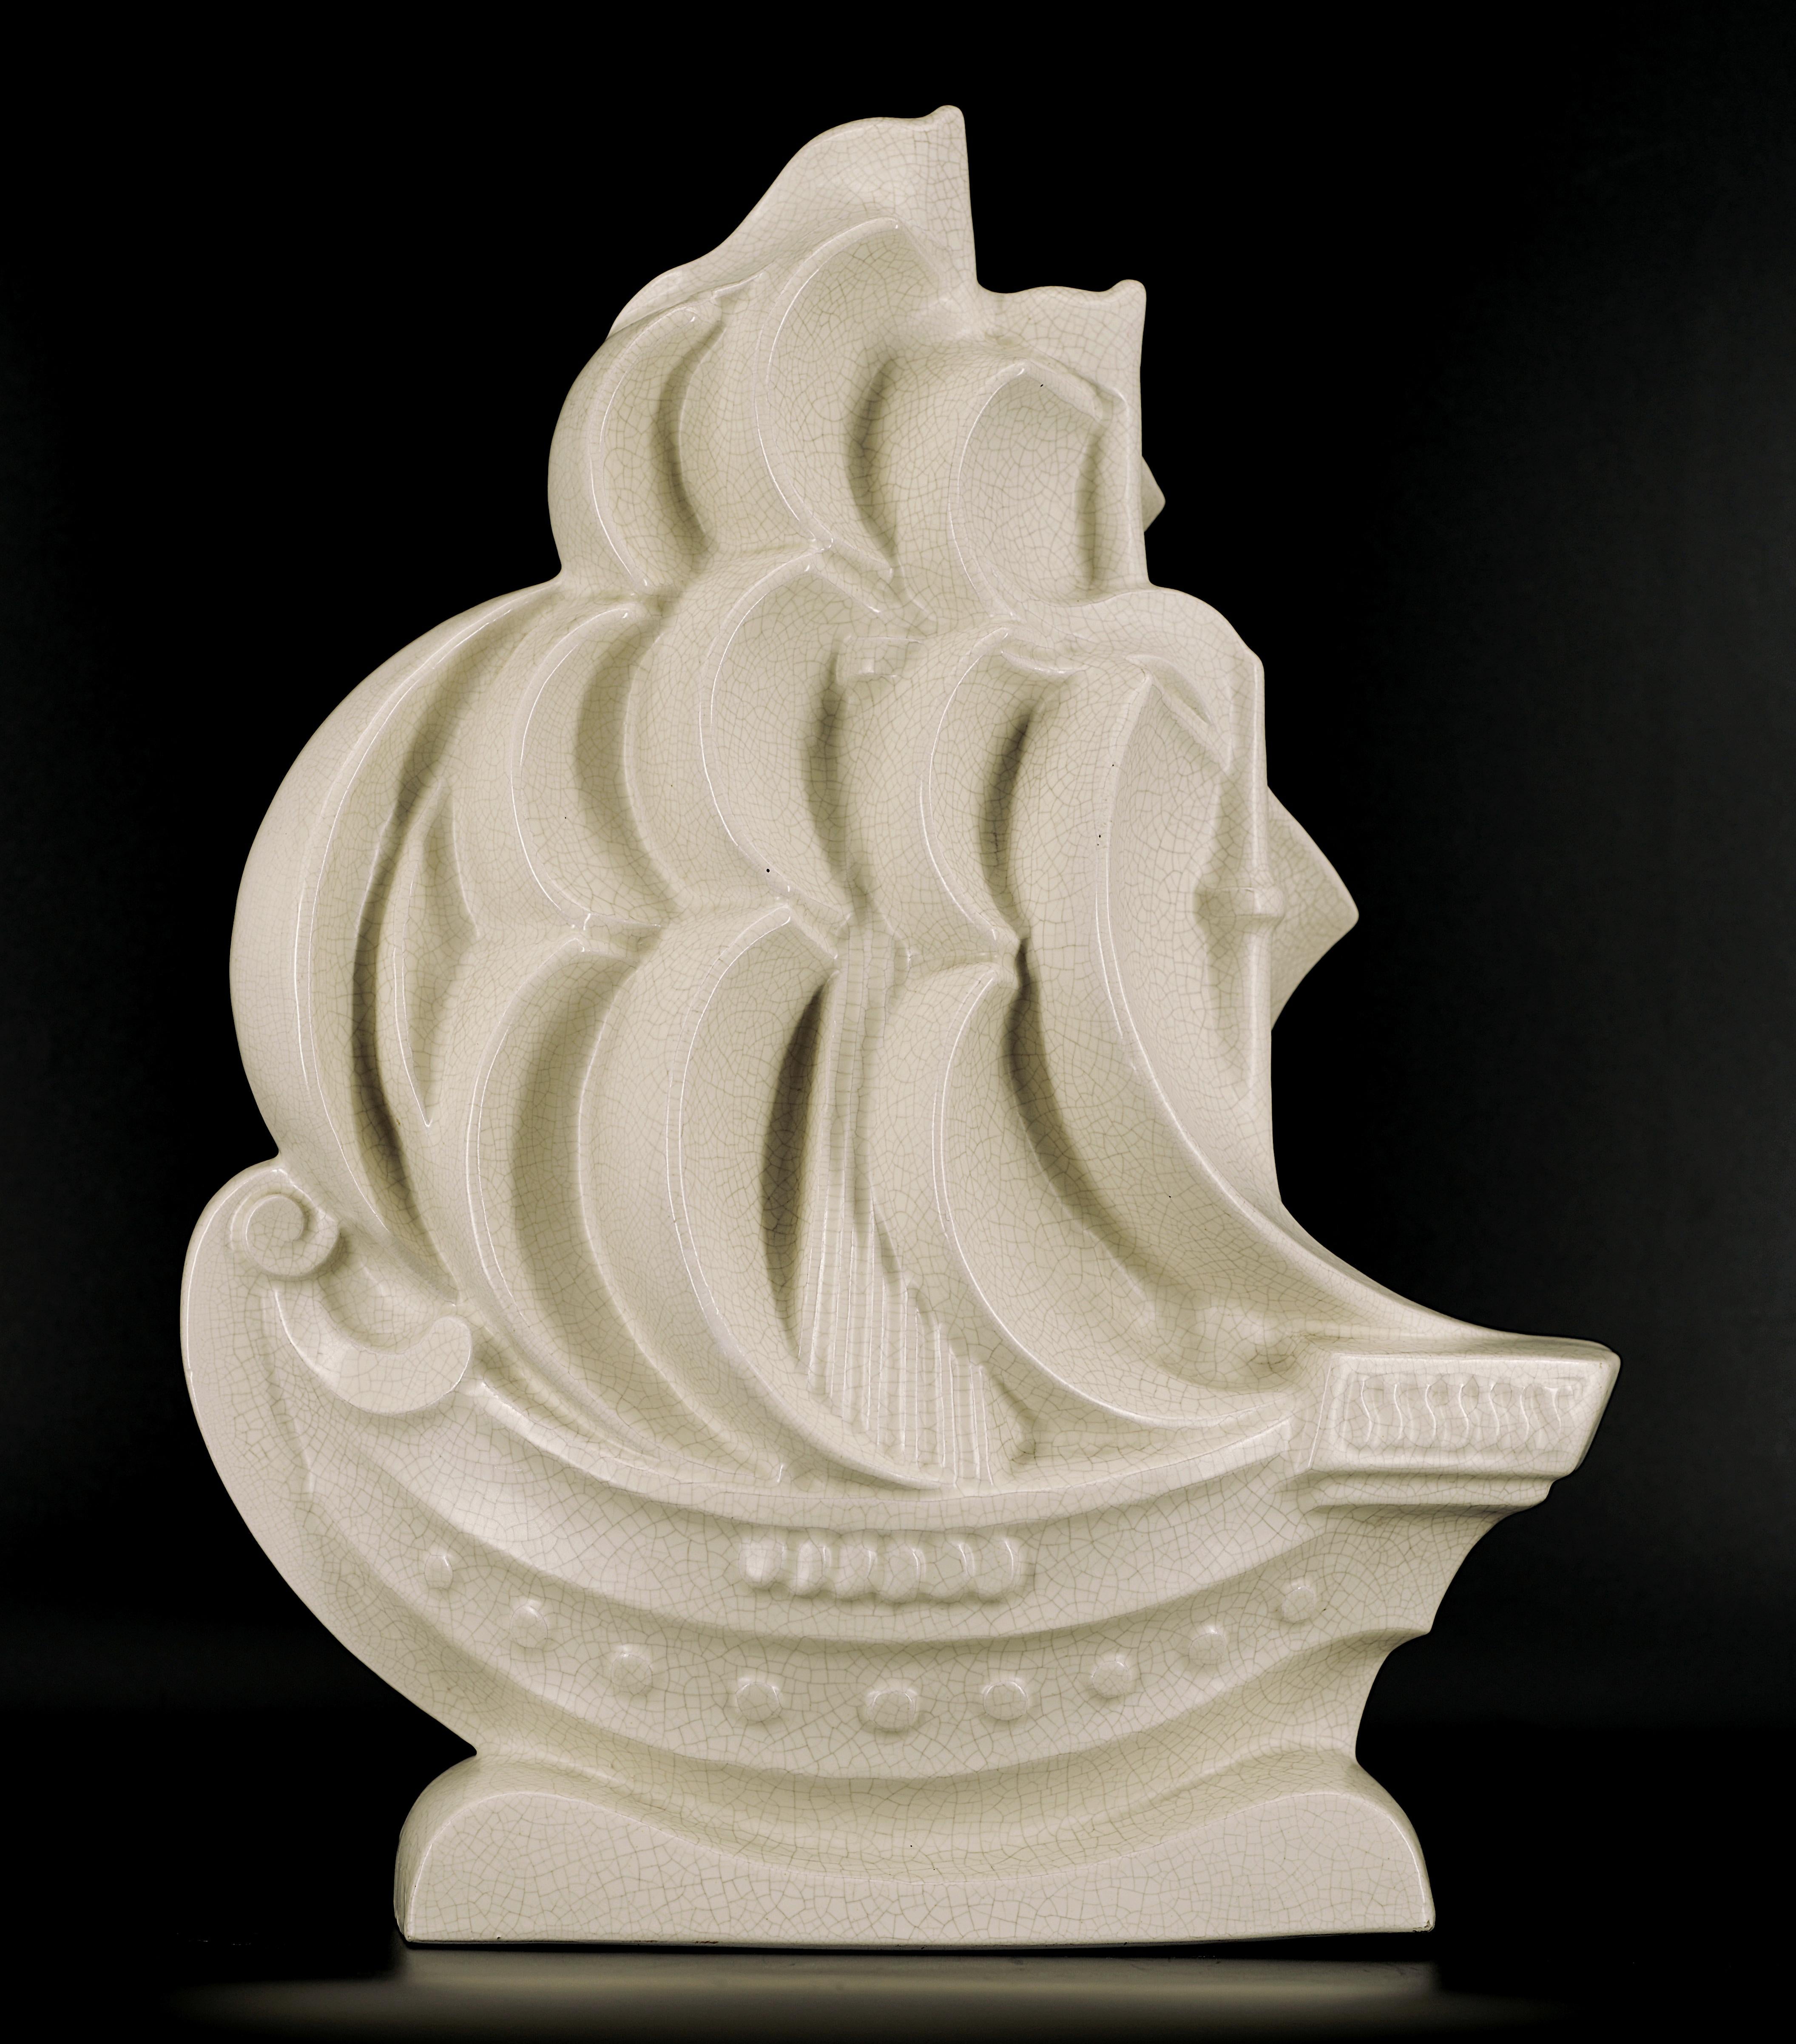 Lejan French Art Deco Crackle Glaze Ceramic Ship Sculpture at Orchies's, 1930 For Sale 1